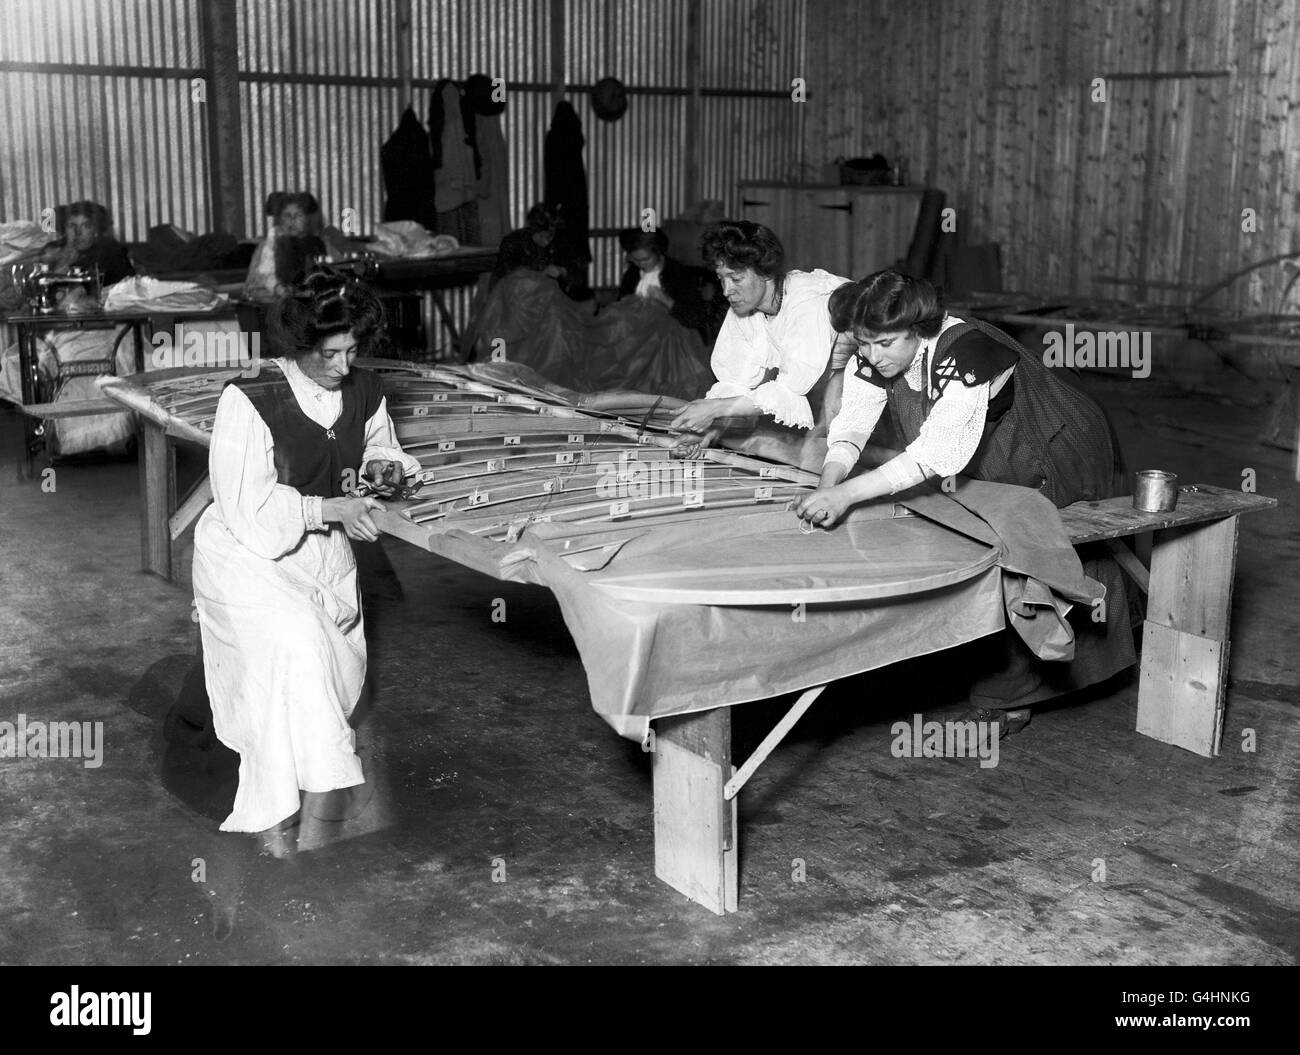 Lavoratrici alla Shorts Airplane Factory, Shellbeach, Leysdown-on-Sea sull'isola di Sheppey. Foto Stock